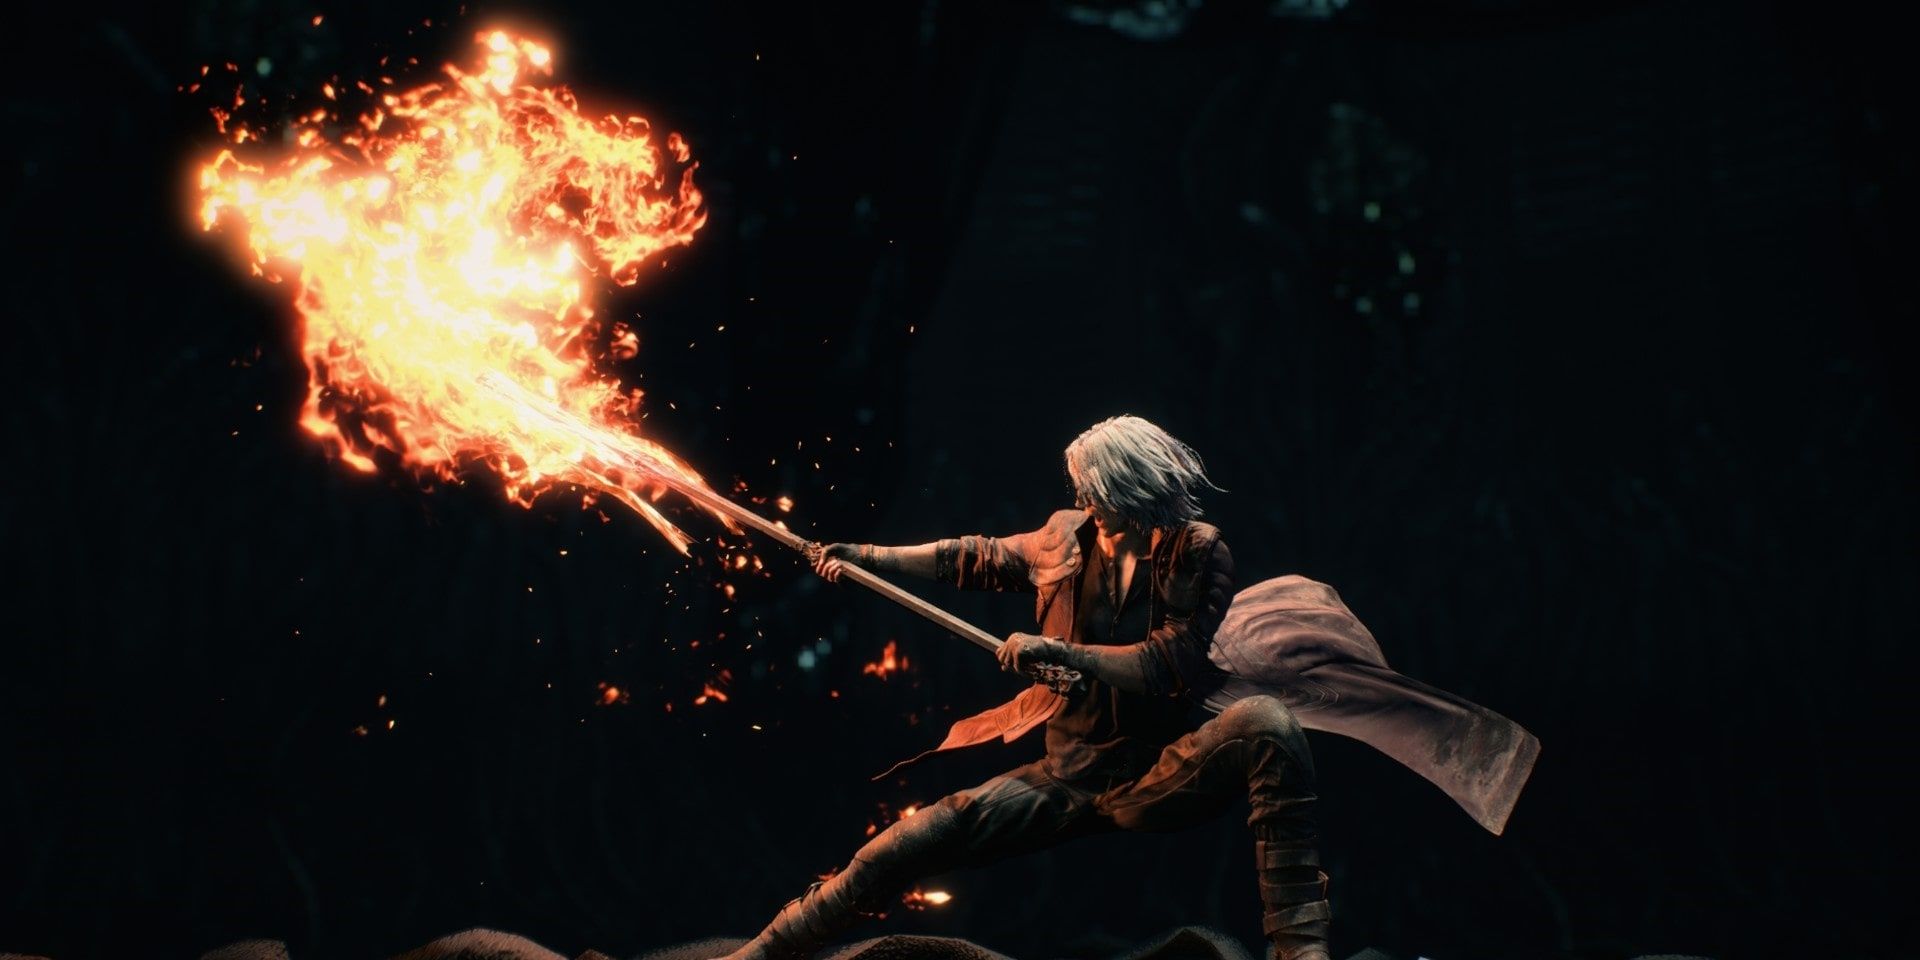 Dante using King Cerberus in its fire bo staff form